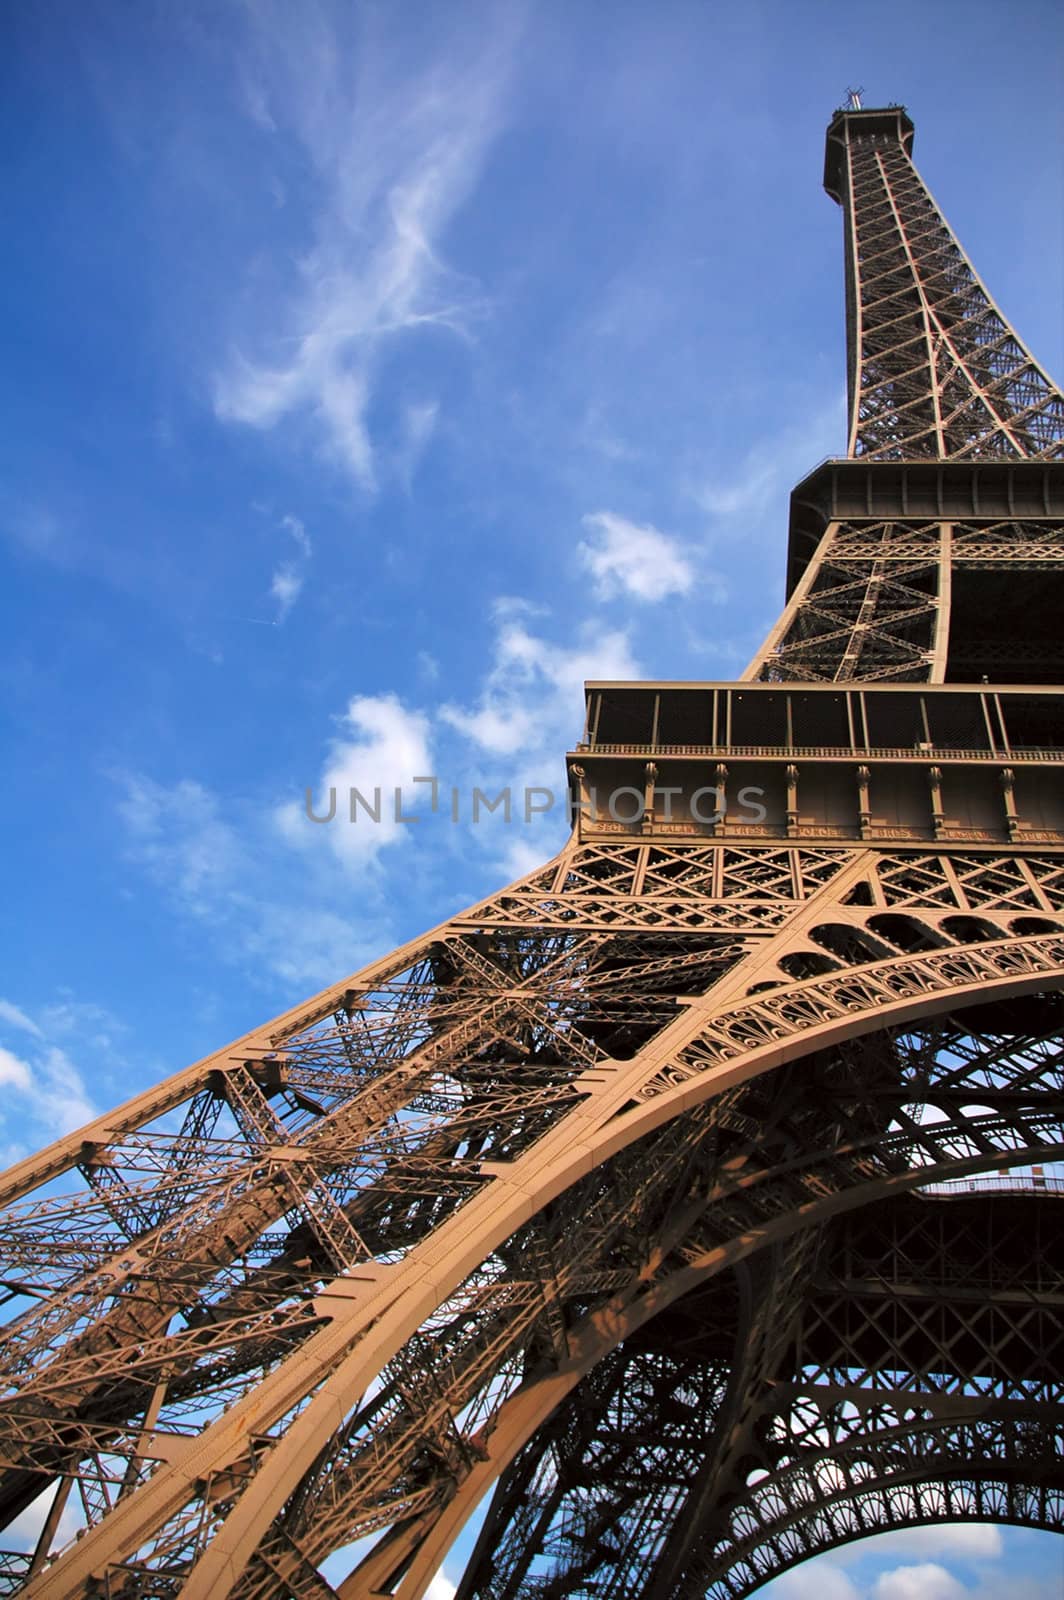 Under the Eiffel tower by t3mujin